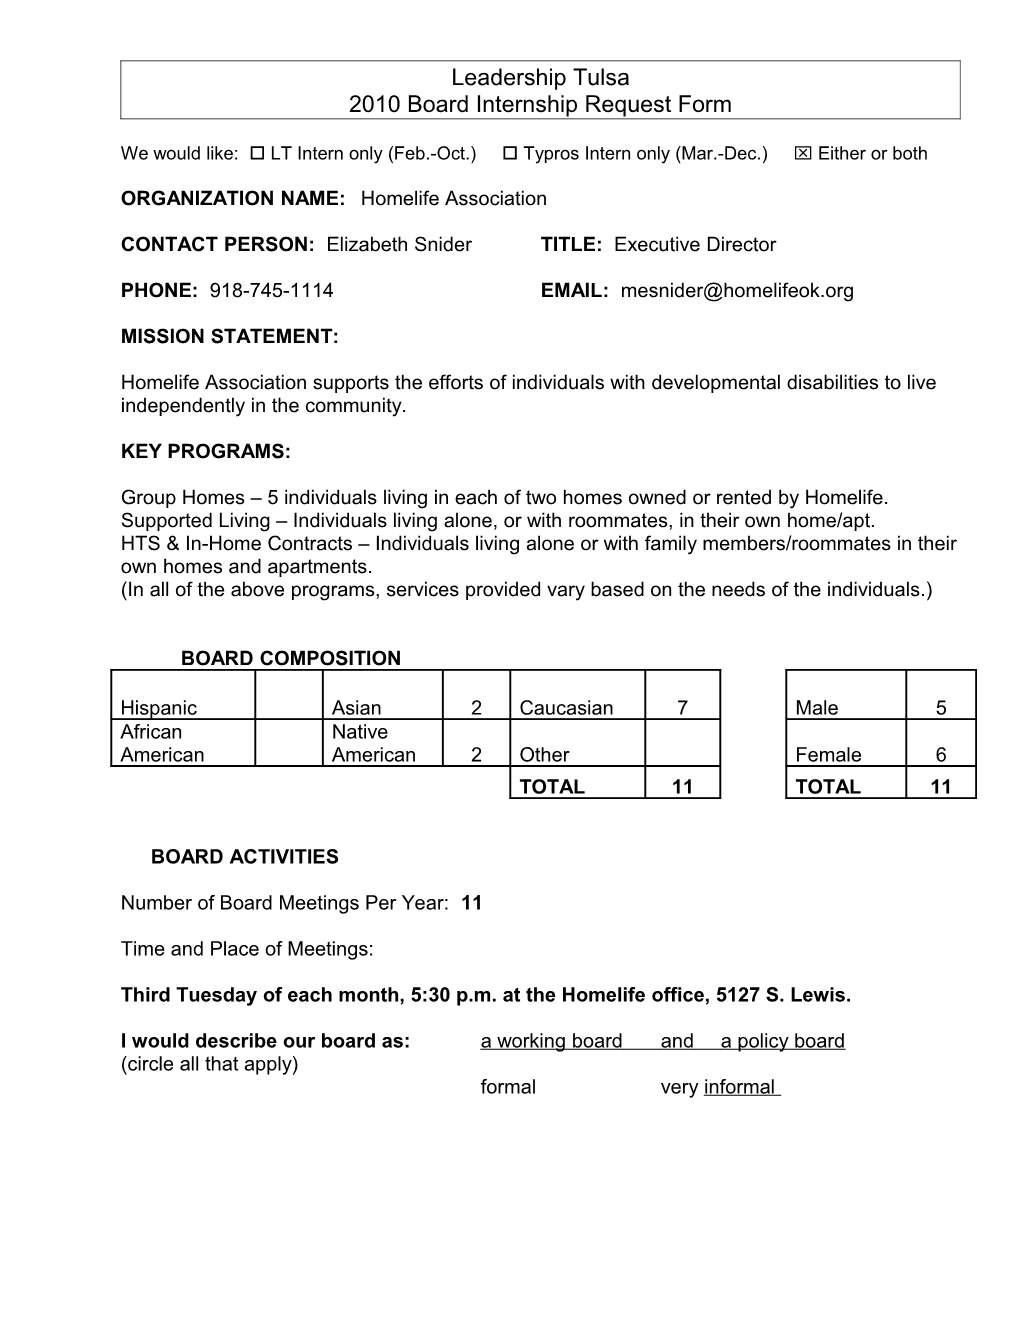 2010 Board Internship Request Form s2